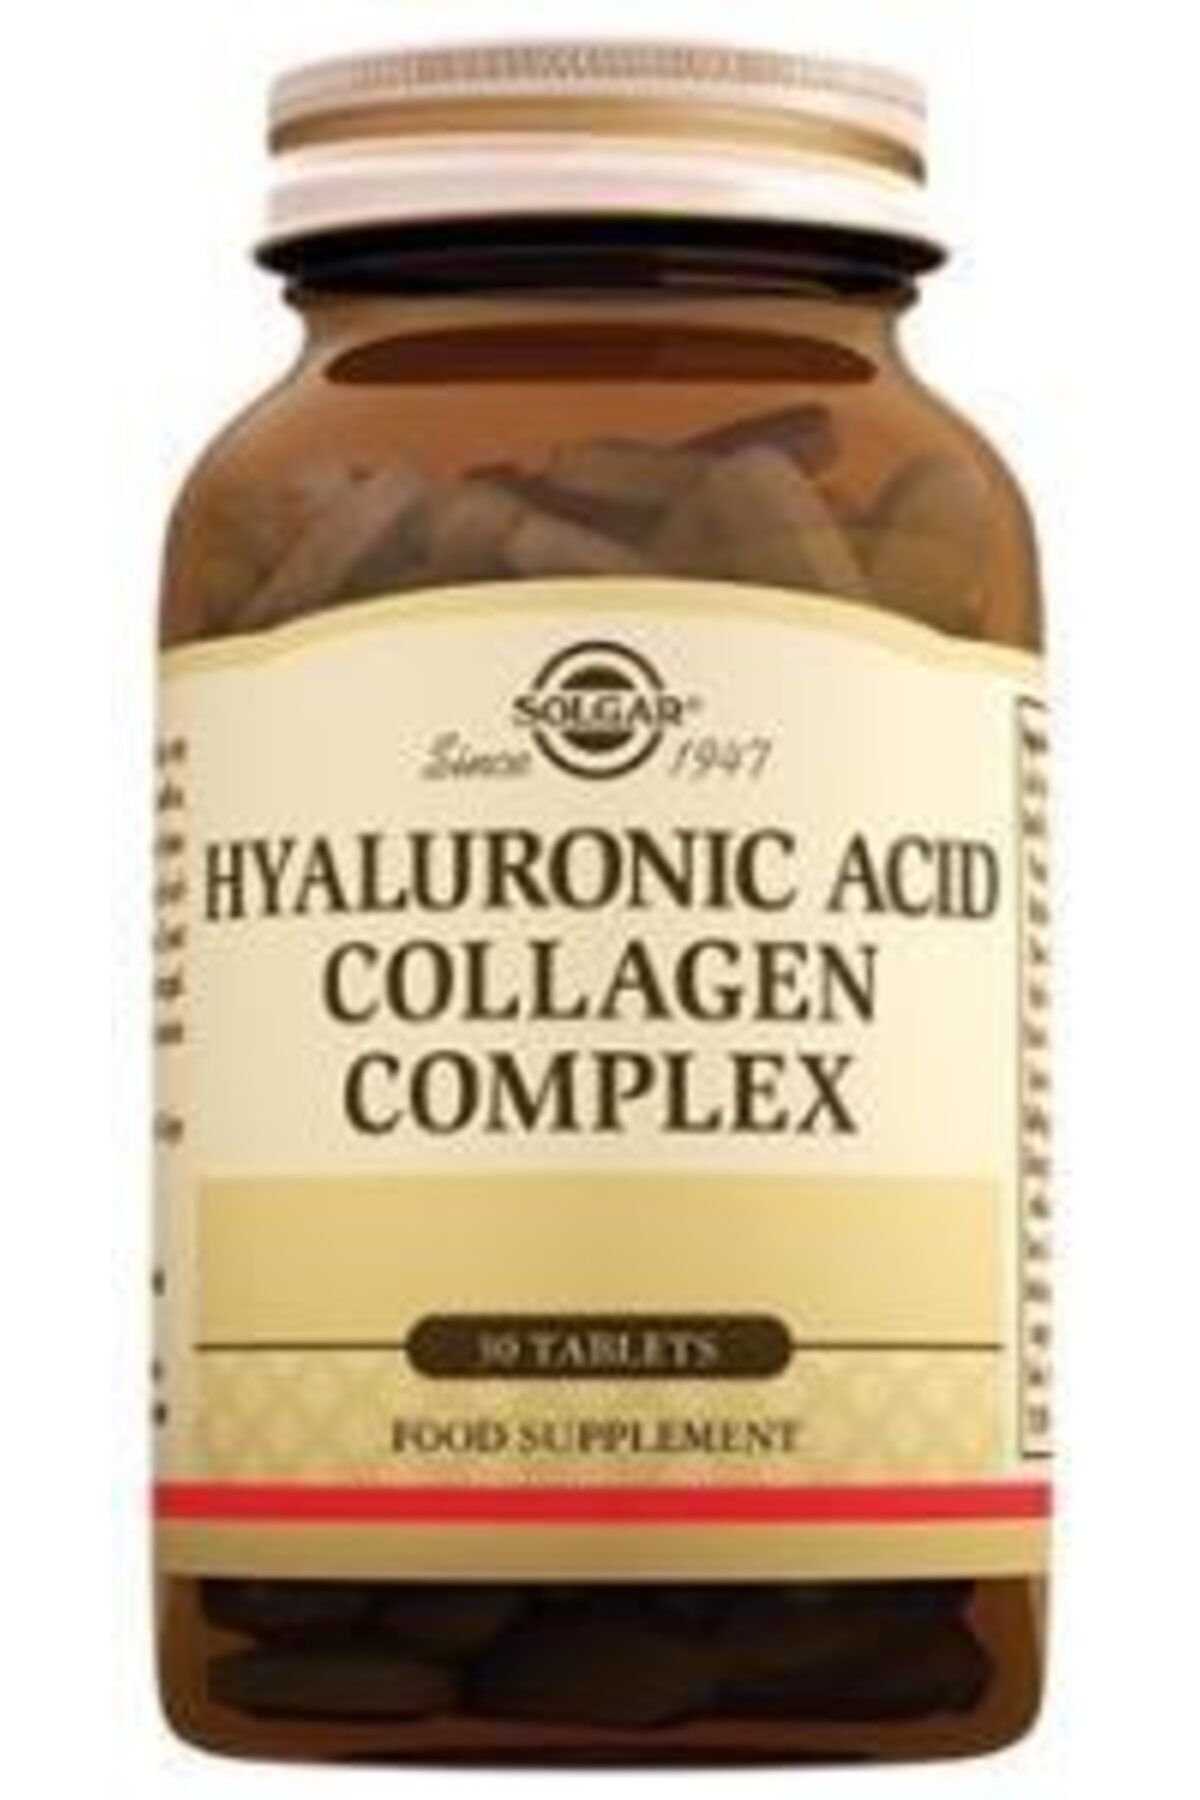 Solgar Hyaluronic Acid Collagen Complex 30